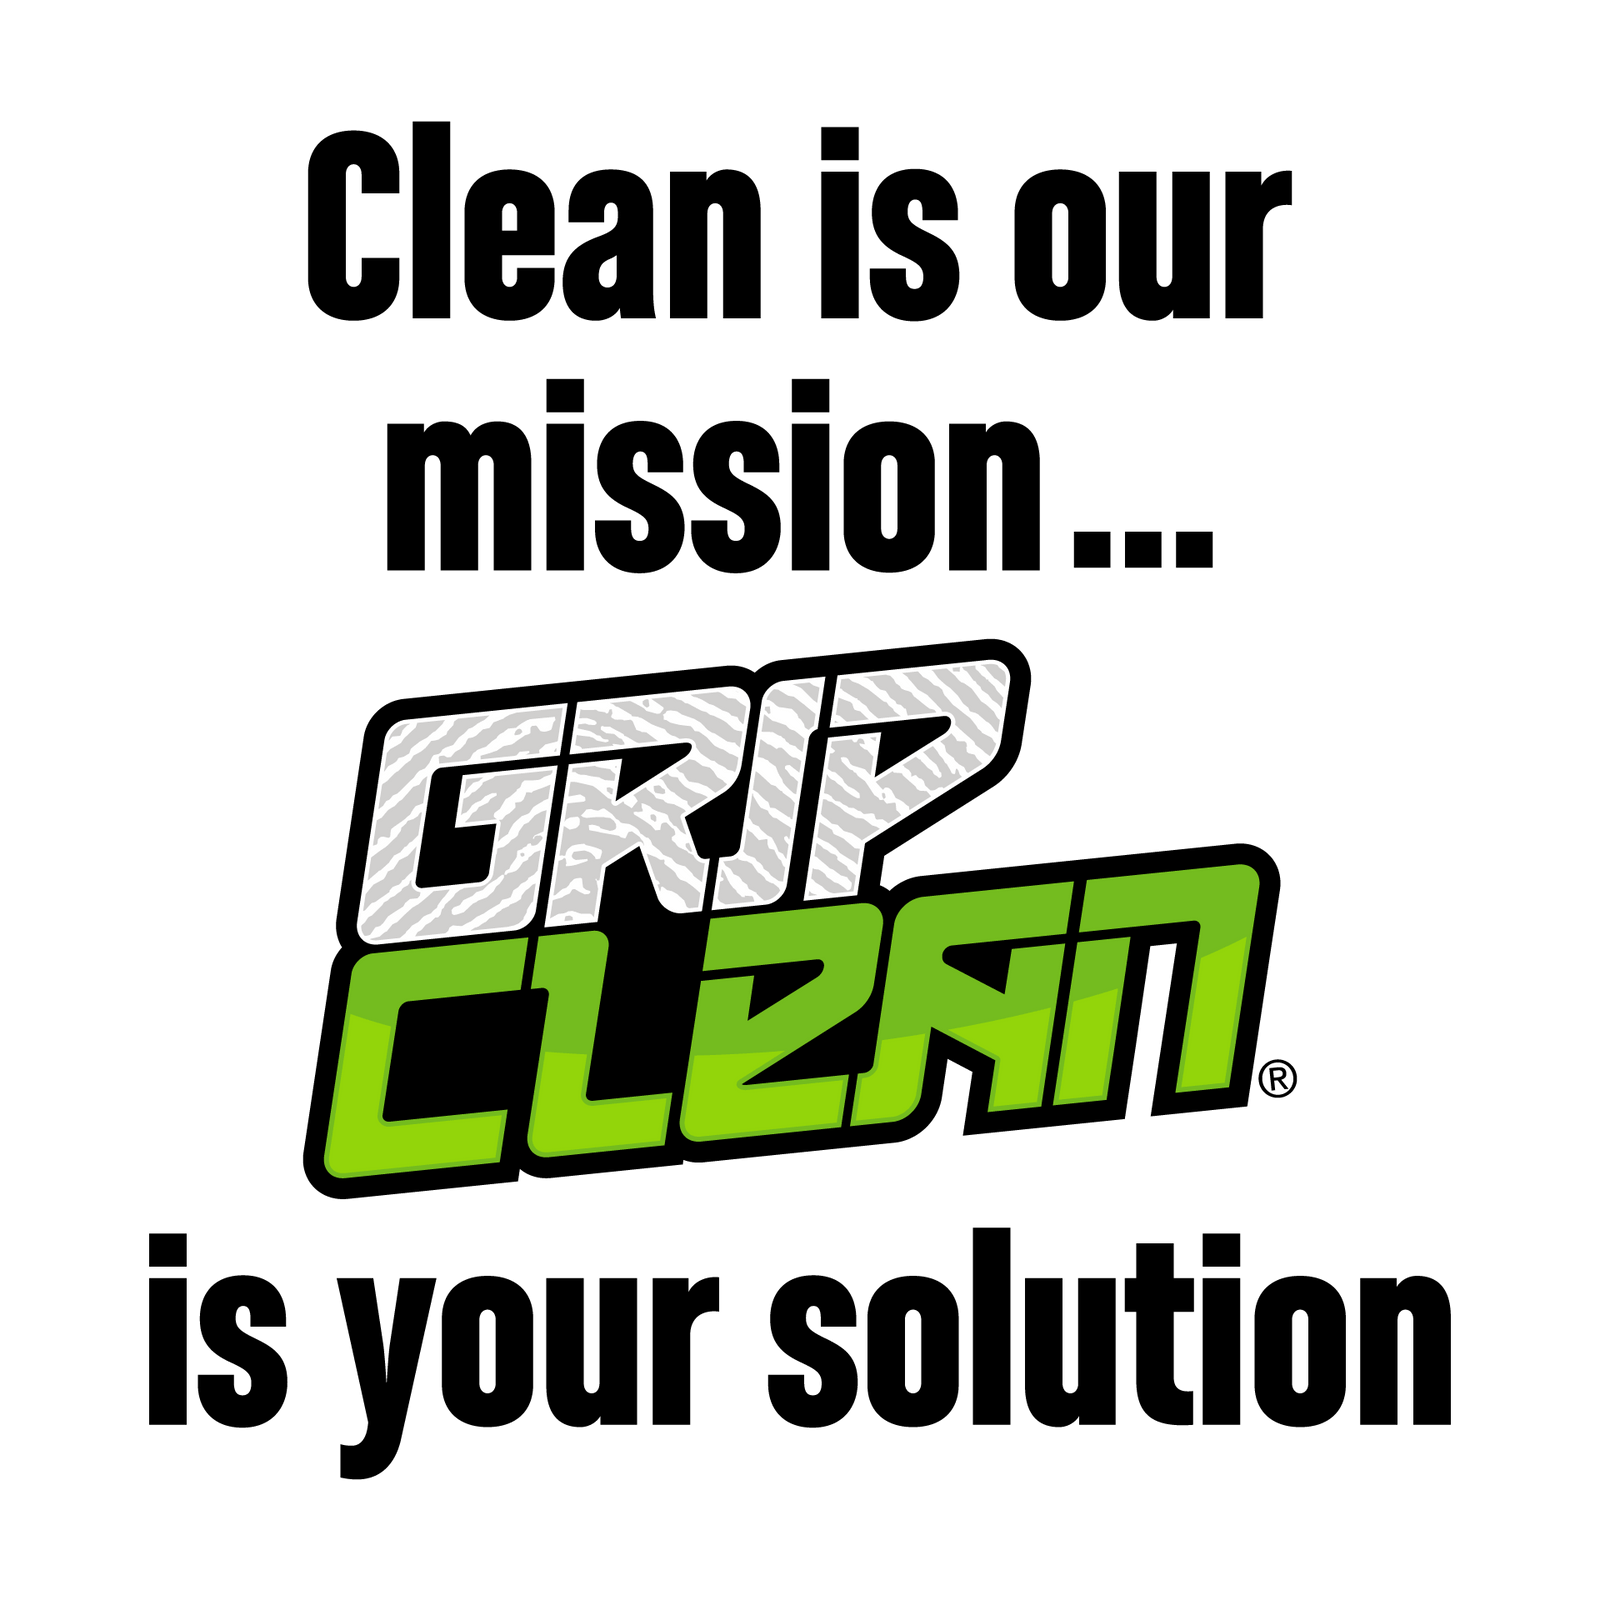 Would you agree? #heavyduty #gripclean #soap #mechanic